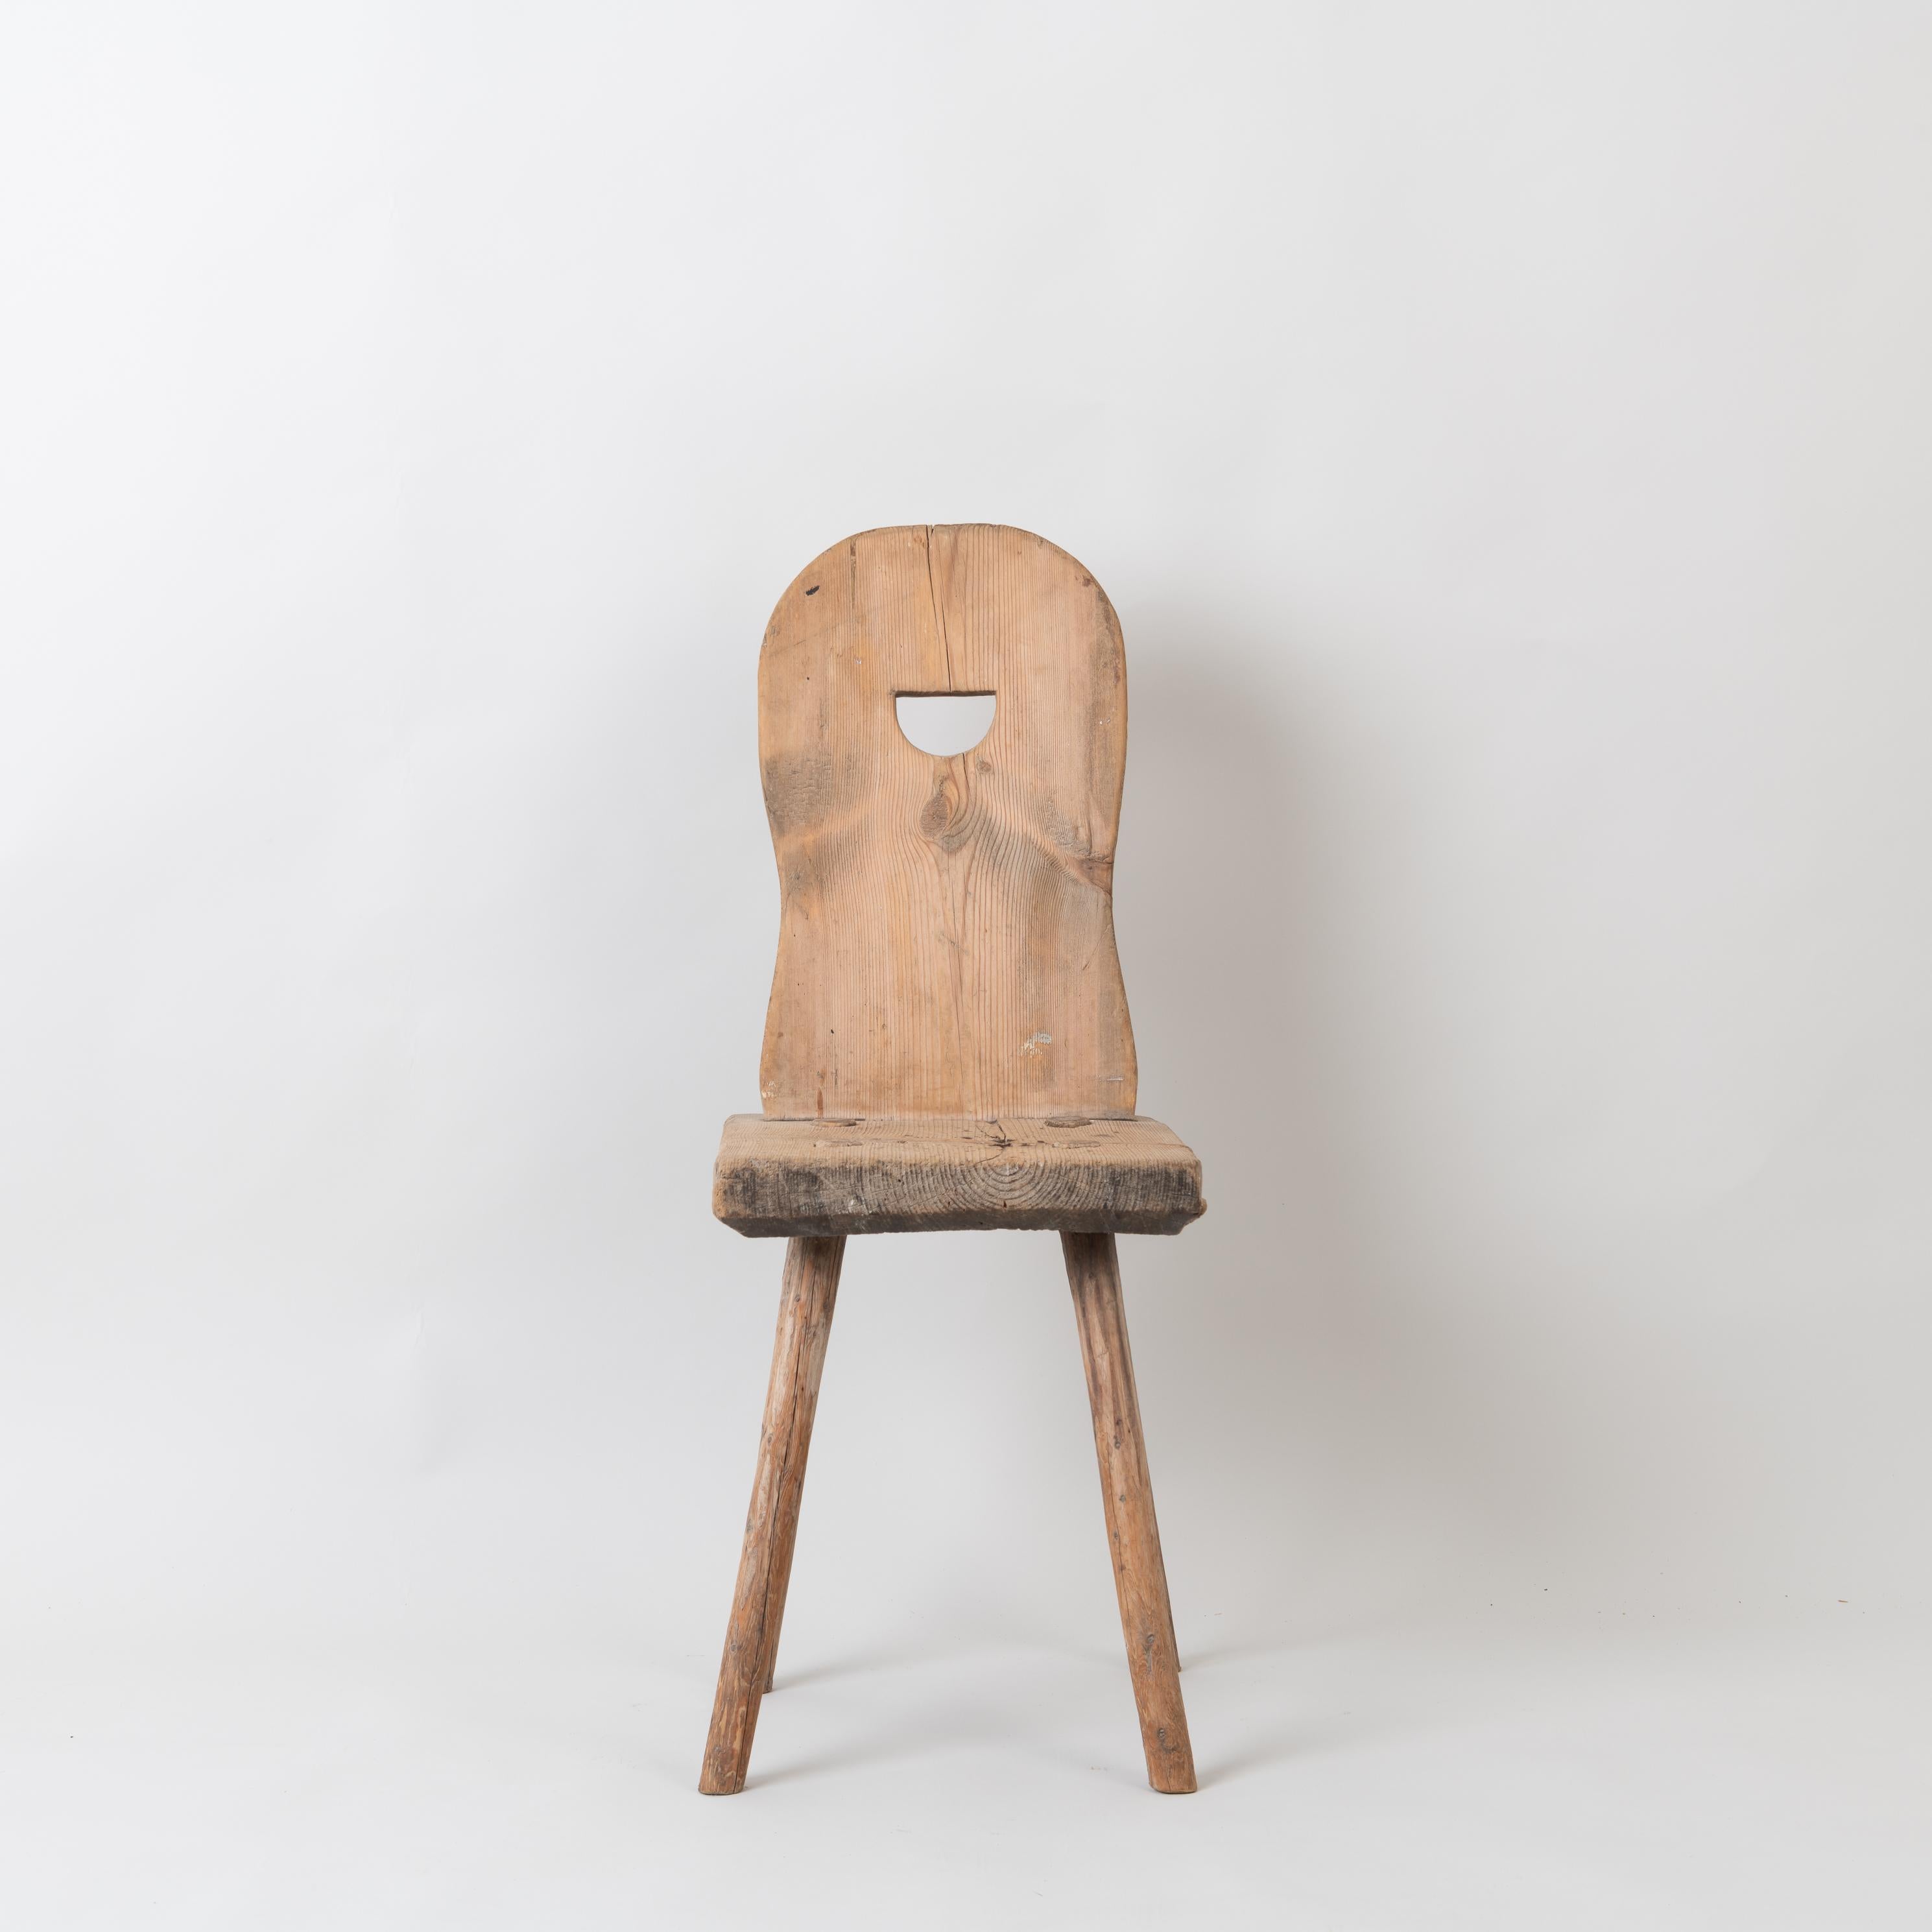 19th Century Swedish Folk Art Rustic Chair 1